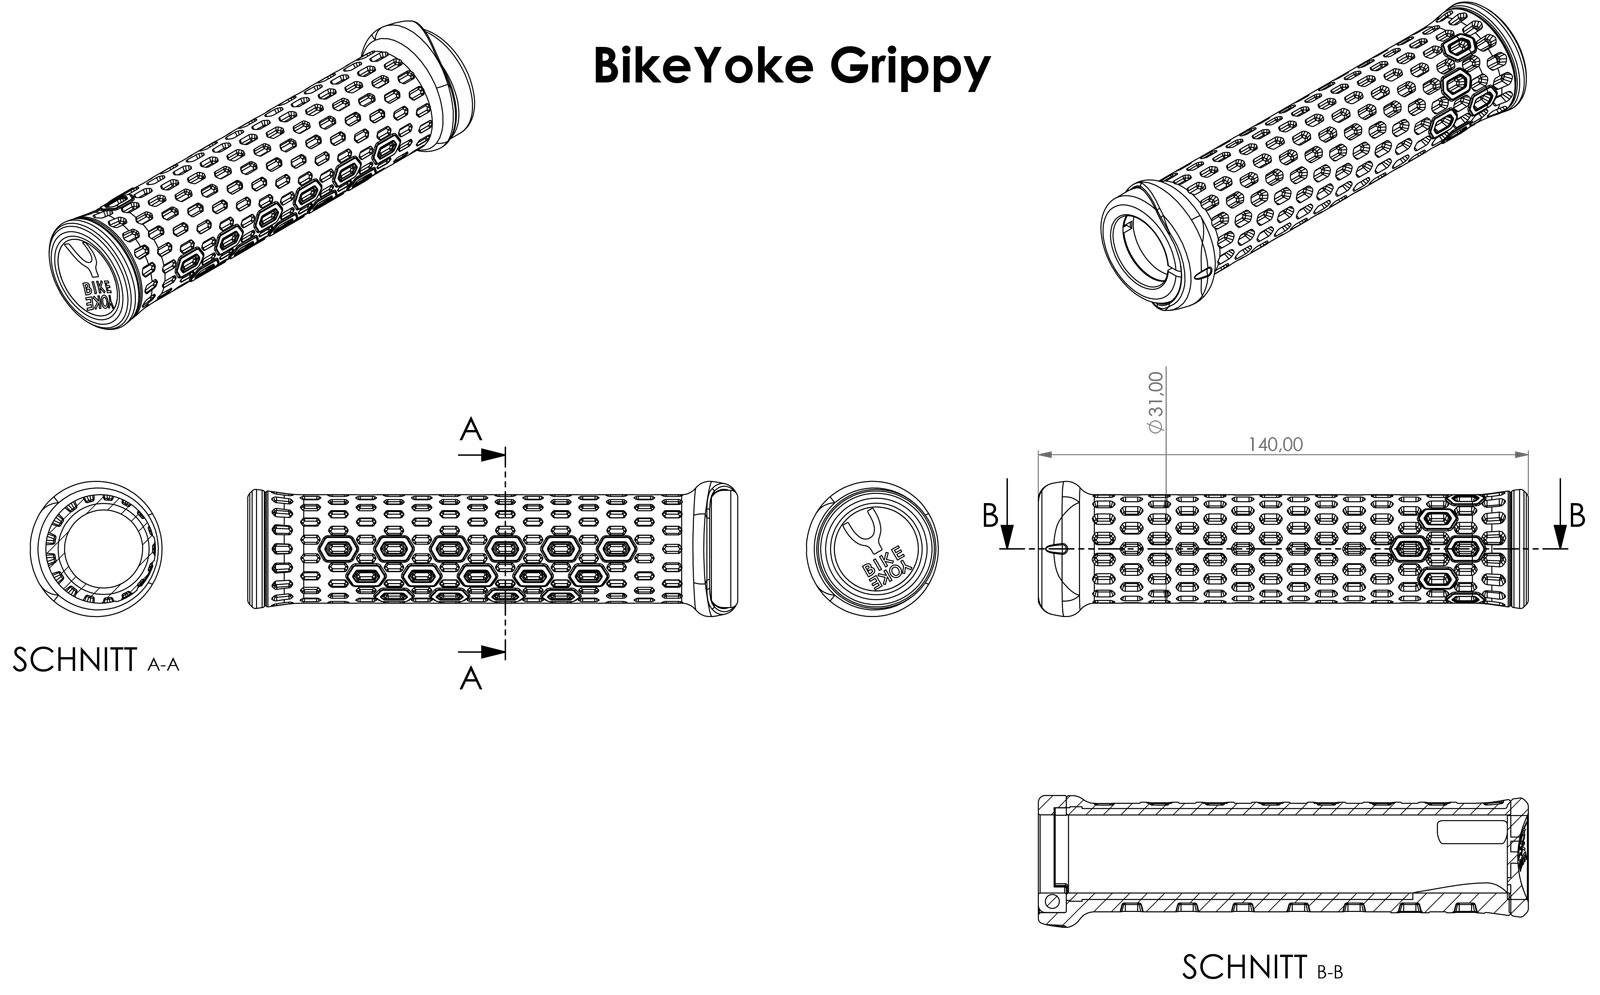 bikeyoke grippy grip specs 140mm long 31mm diameter